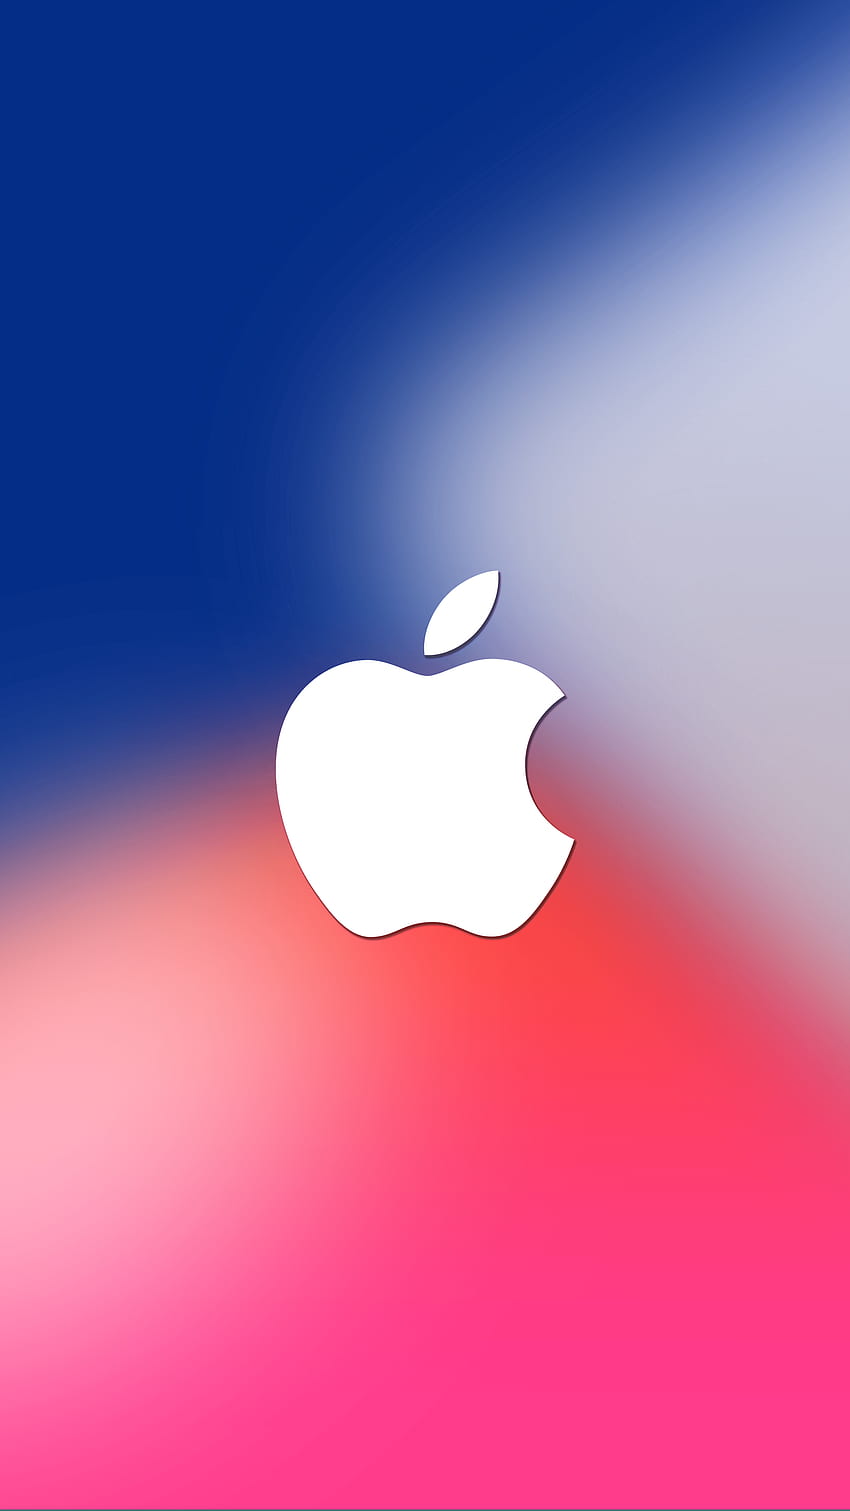 Free Apple Logo Iphone Wallpaper Downloads 100 Apple Logo Iphone  Wallpapers for FREE  Wallpaperscom